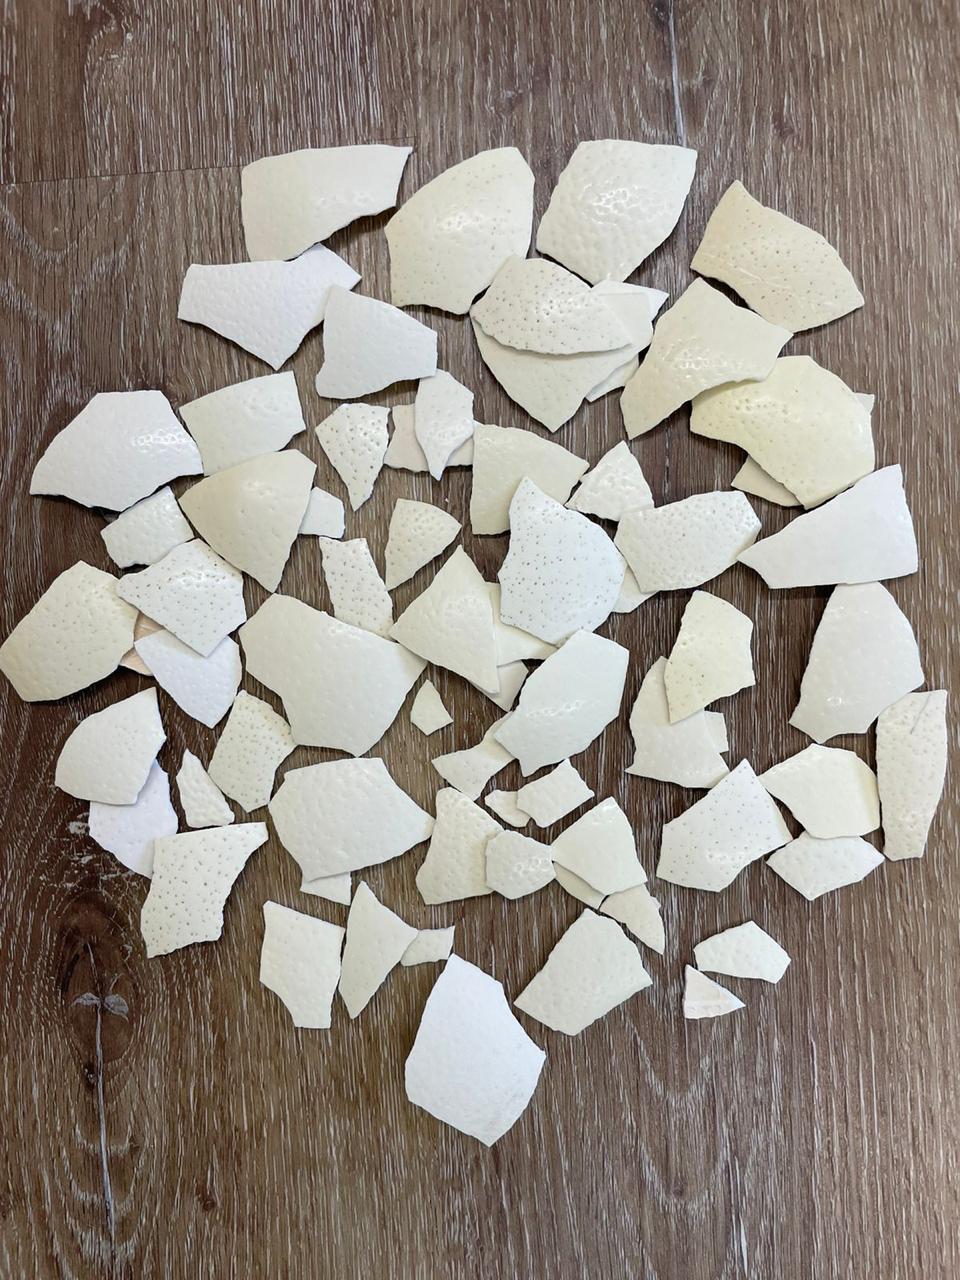 Ostrich Eggshells Broken Pieces (Fragments)